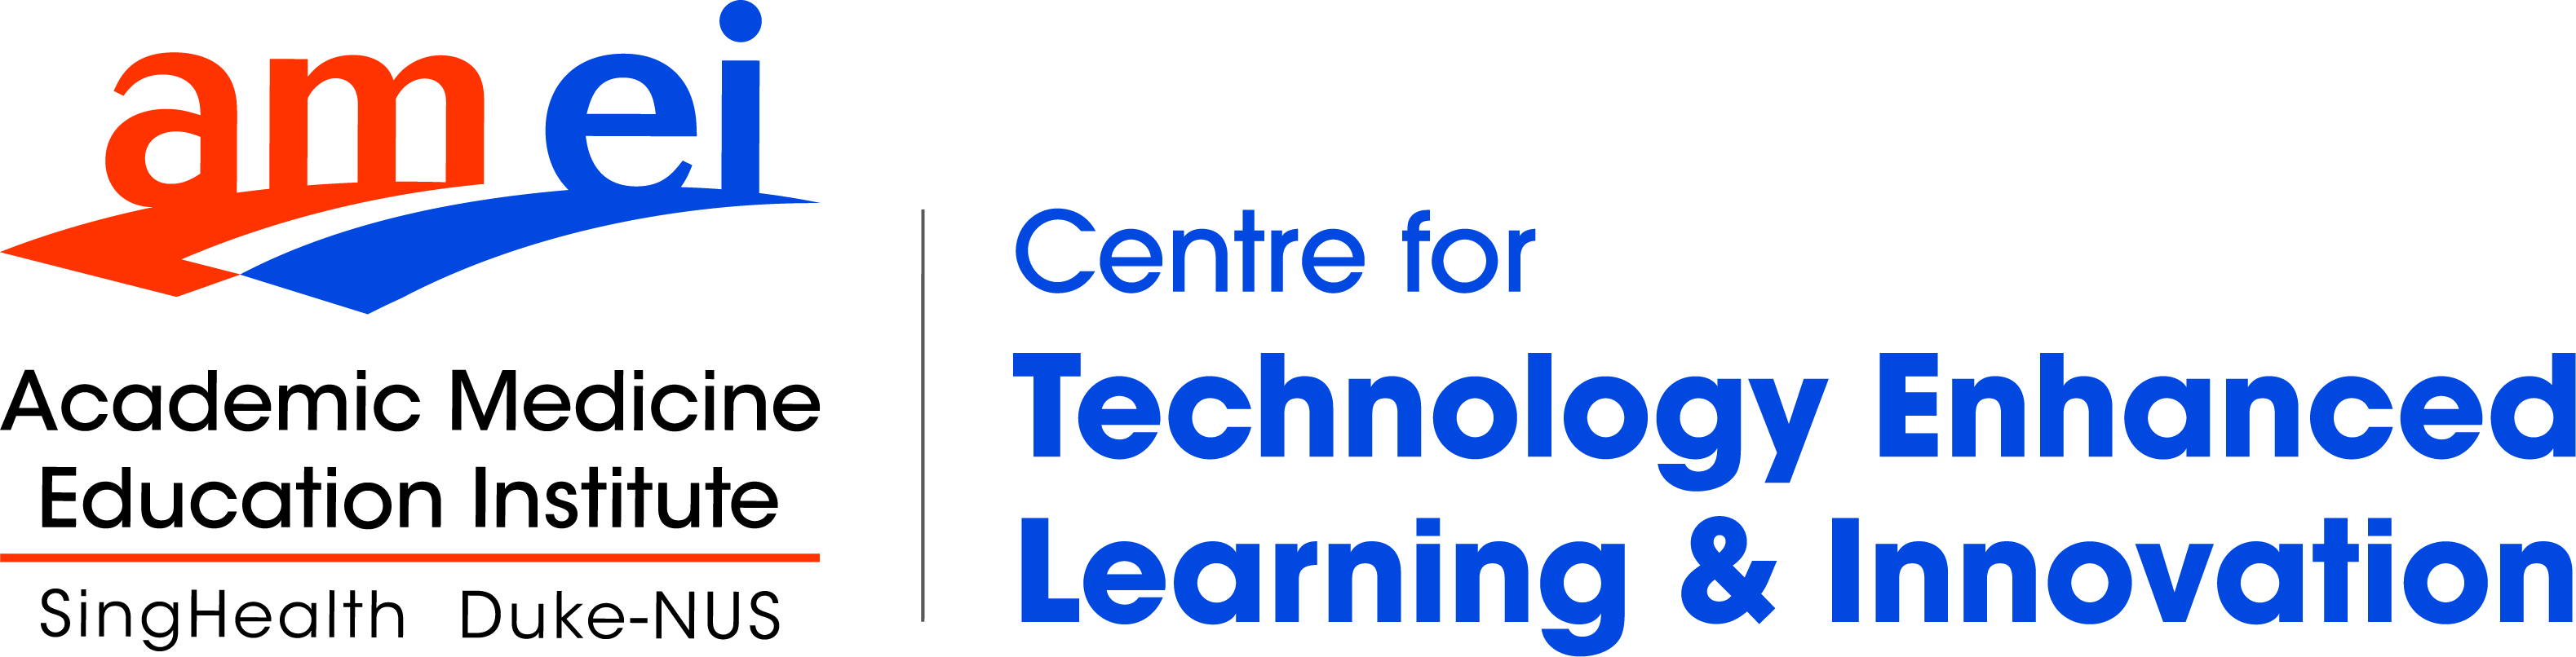 Centre for Technology Enhanced Learning and Innovation.jpg